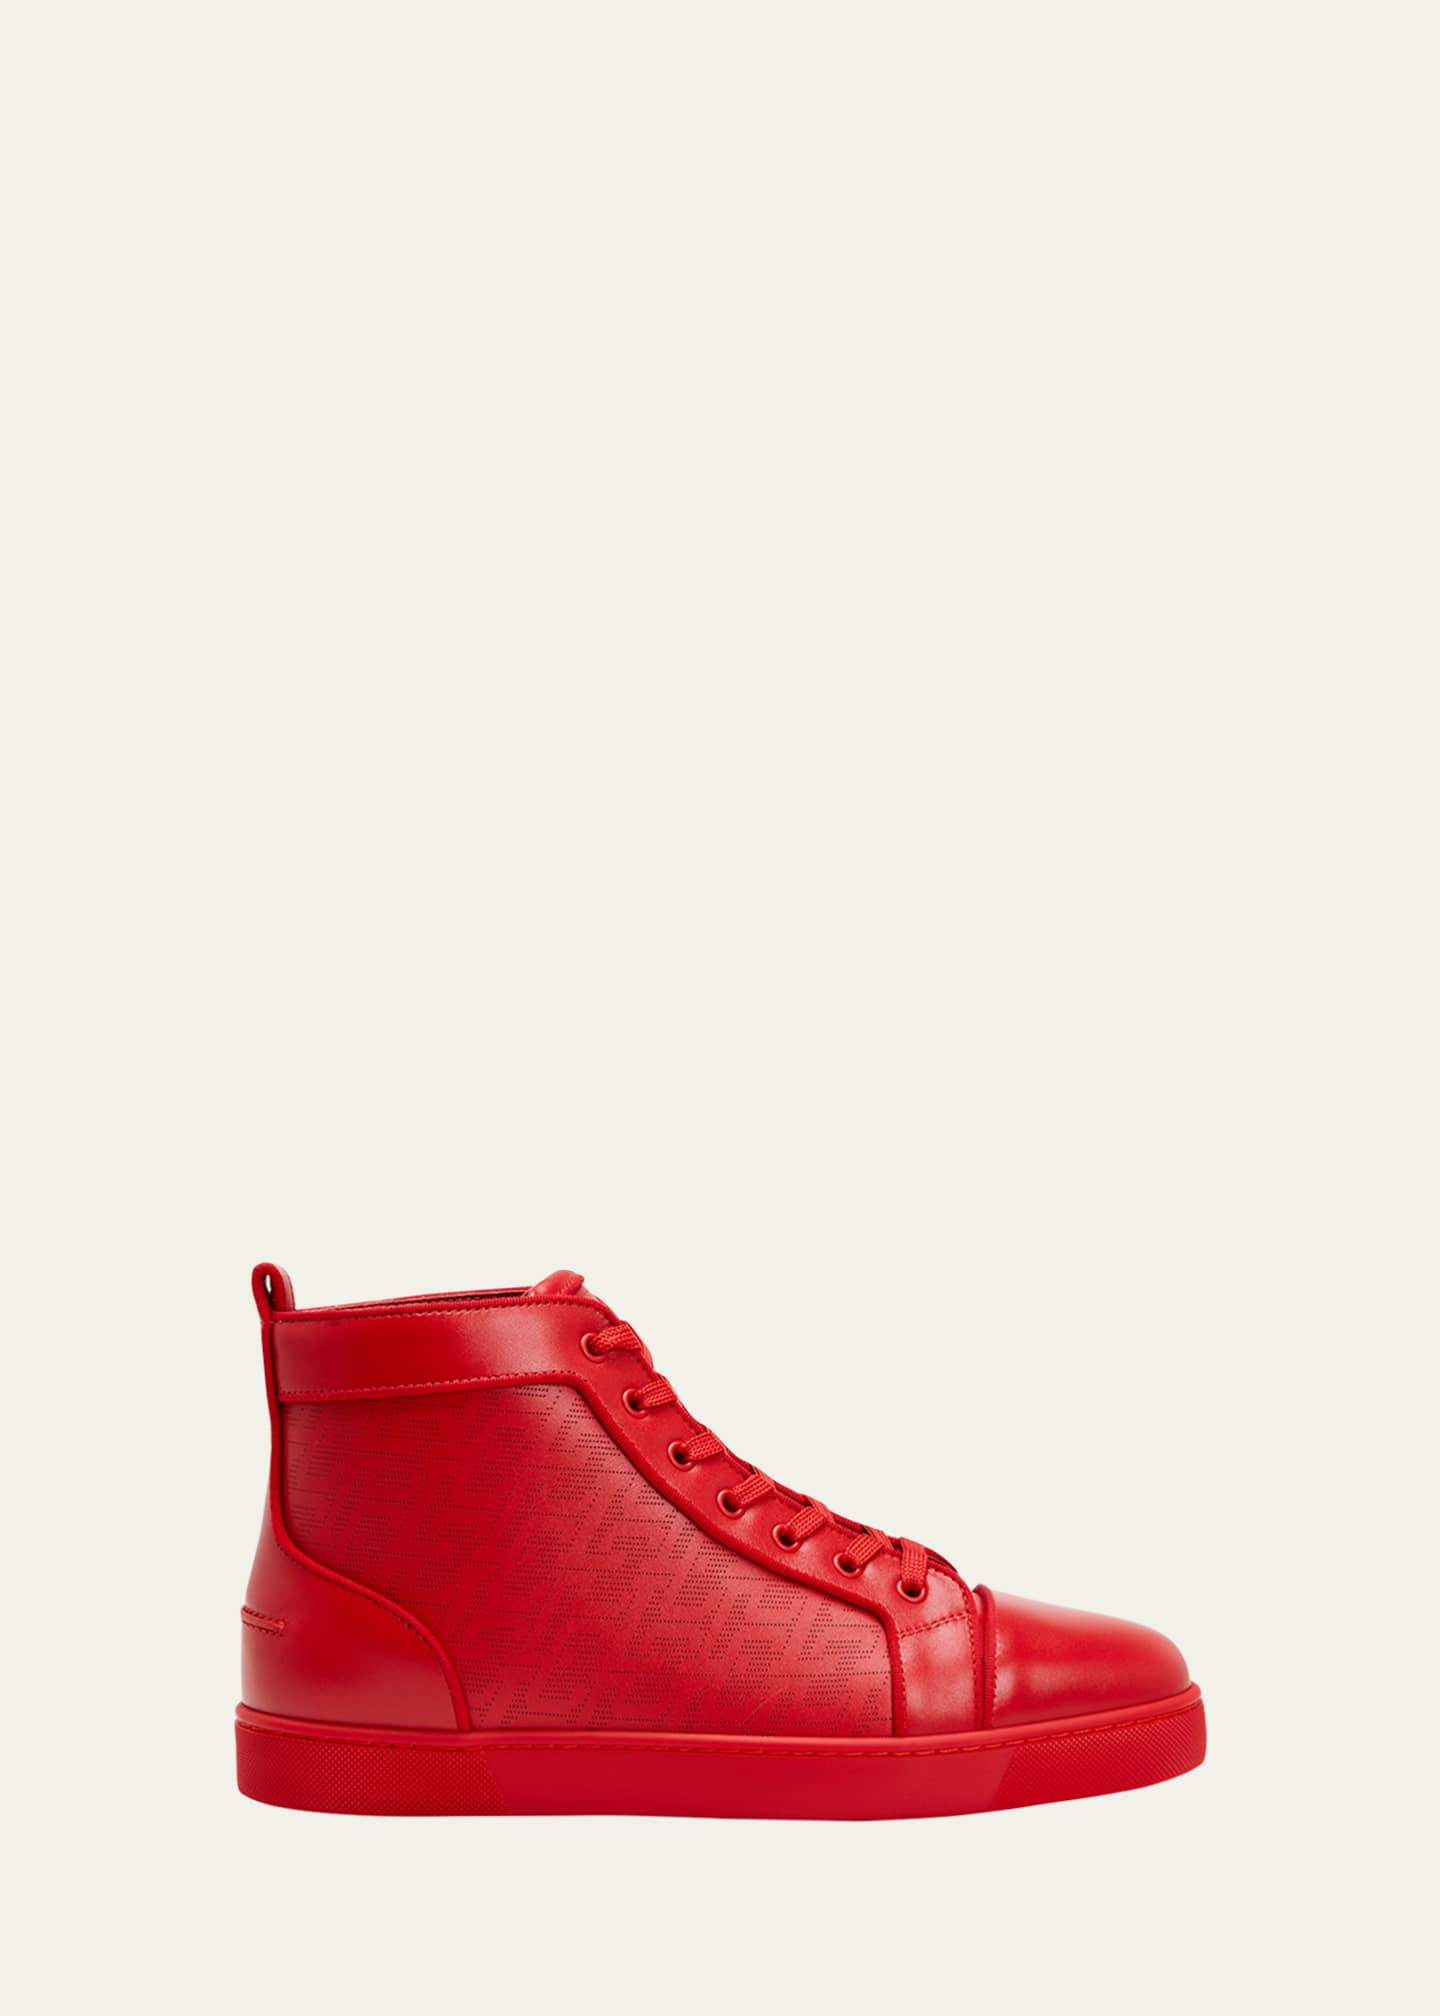 Fashion Sneaker Christian Louboutin Mens Shoes - Luxury New High